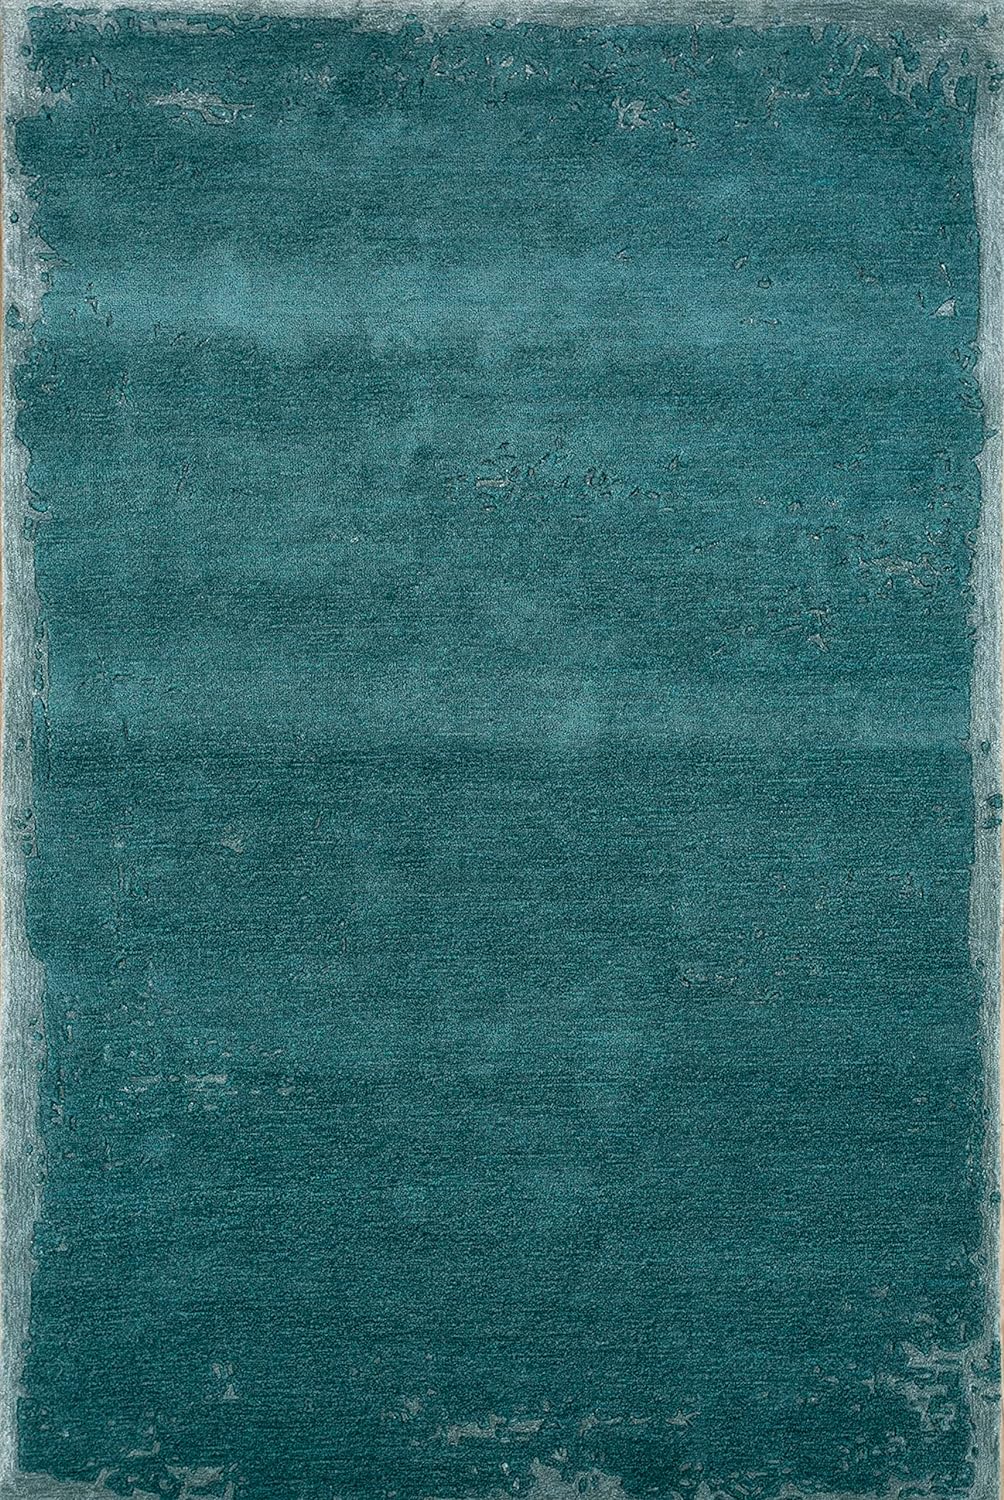 Modern Wool Blend 6X9 Area Carpet in Peacock/Seaside Blue | Shudd Wool and Viscose Modern Area Carpet (Peacock Blue/Seaside Blue, 6x9 Feet)